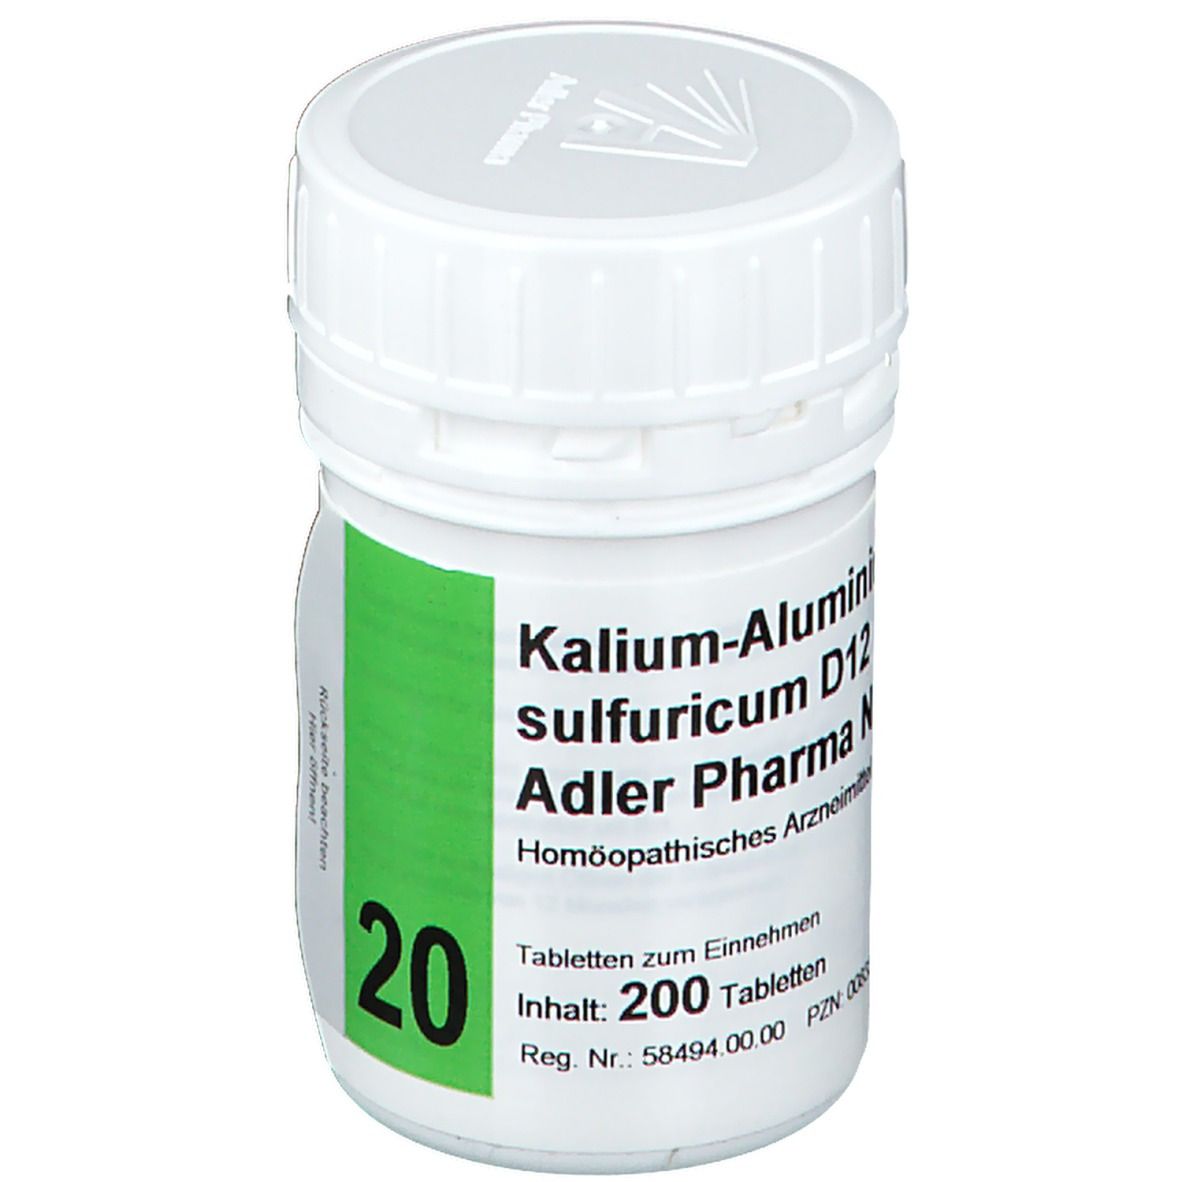 Adler Pharma Kalium – Aluminium sulfuricum D12 Biochemie nach Dr. Schüßler Nr. 20